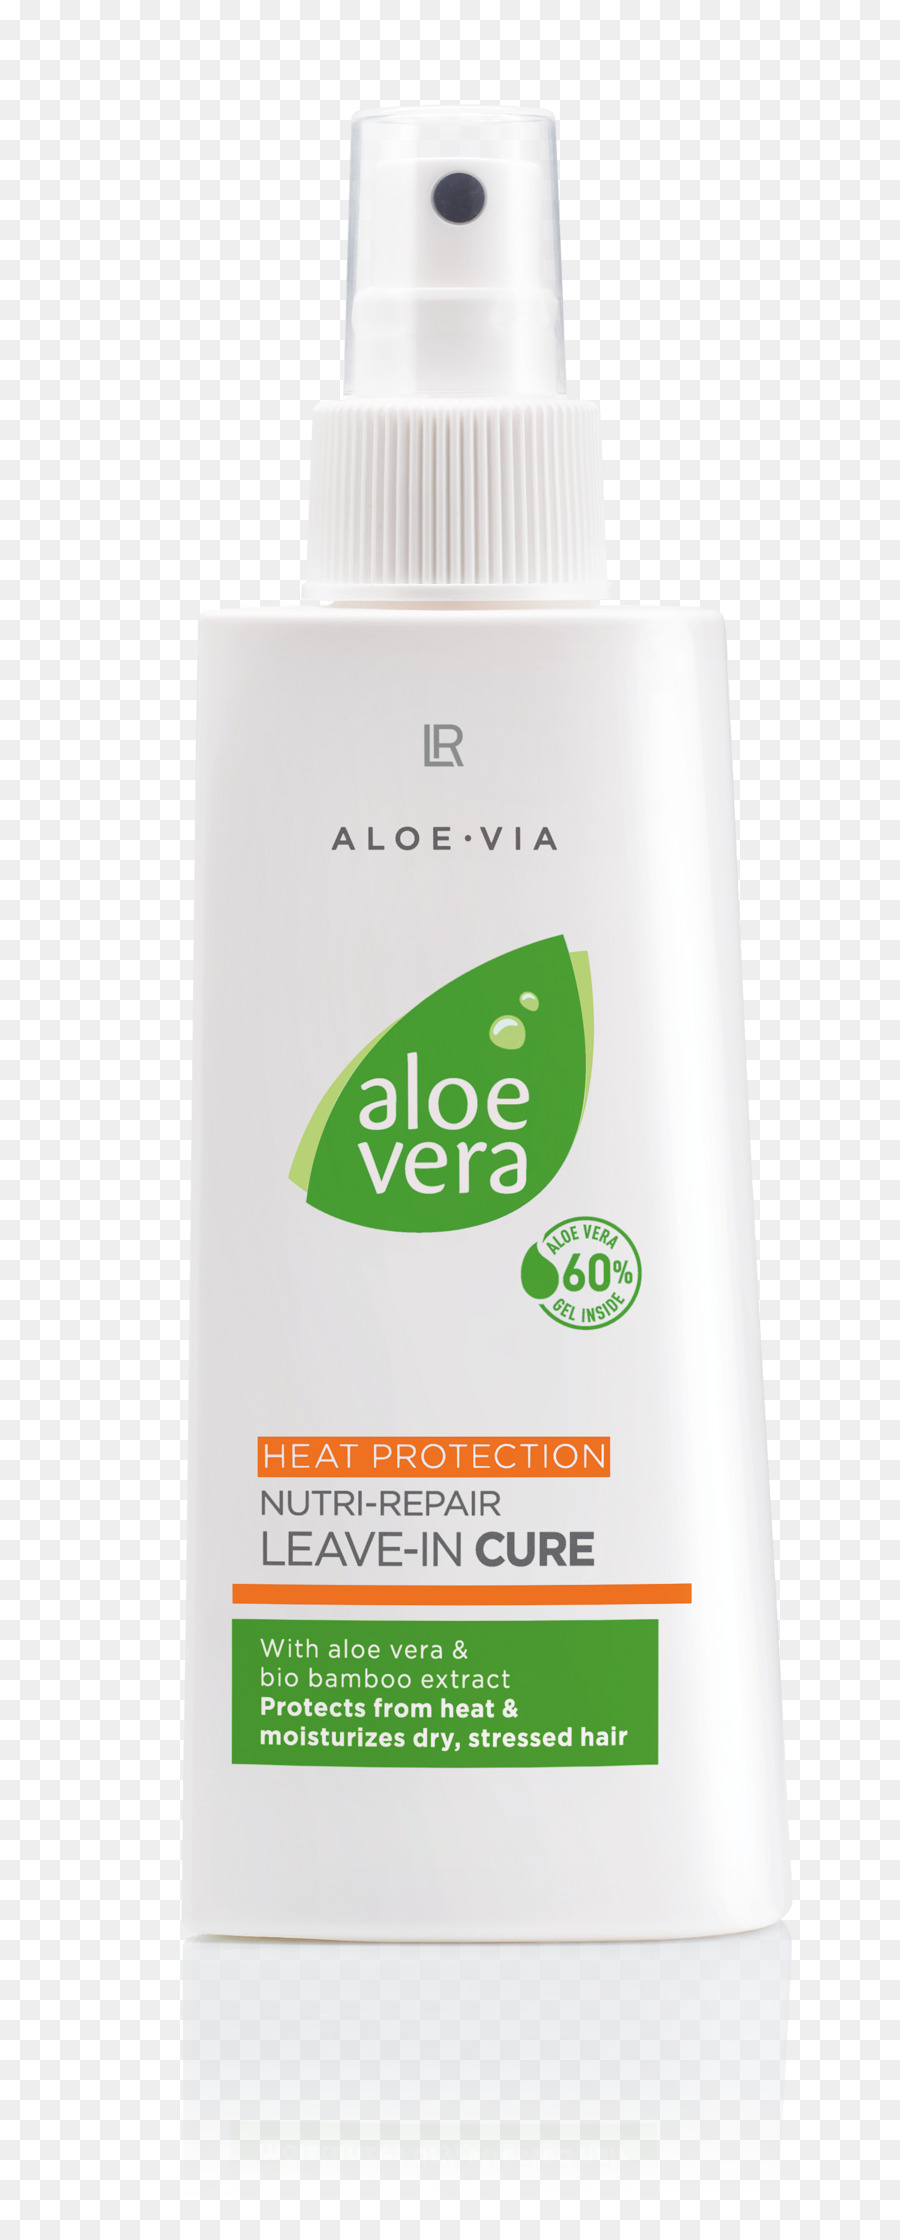 Lotion Aloe vera Creme Hydratace Produkt - aloe vera Kosmetik